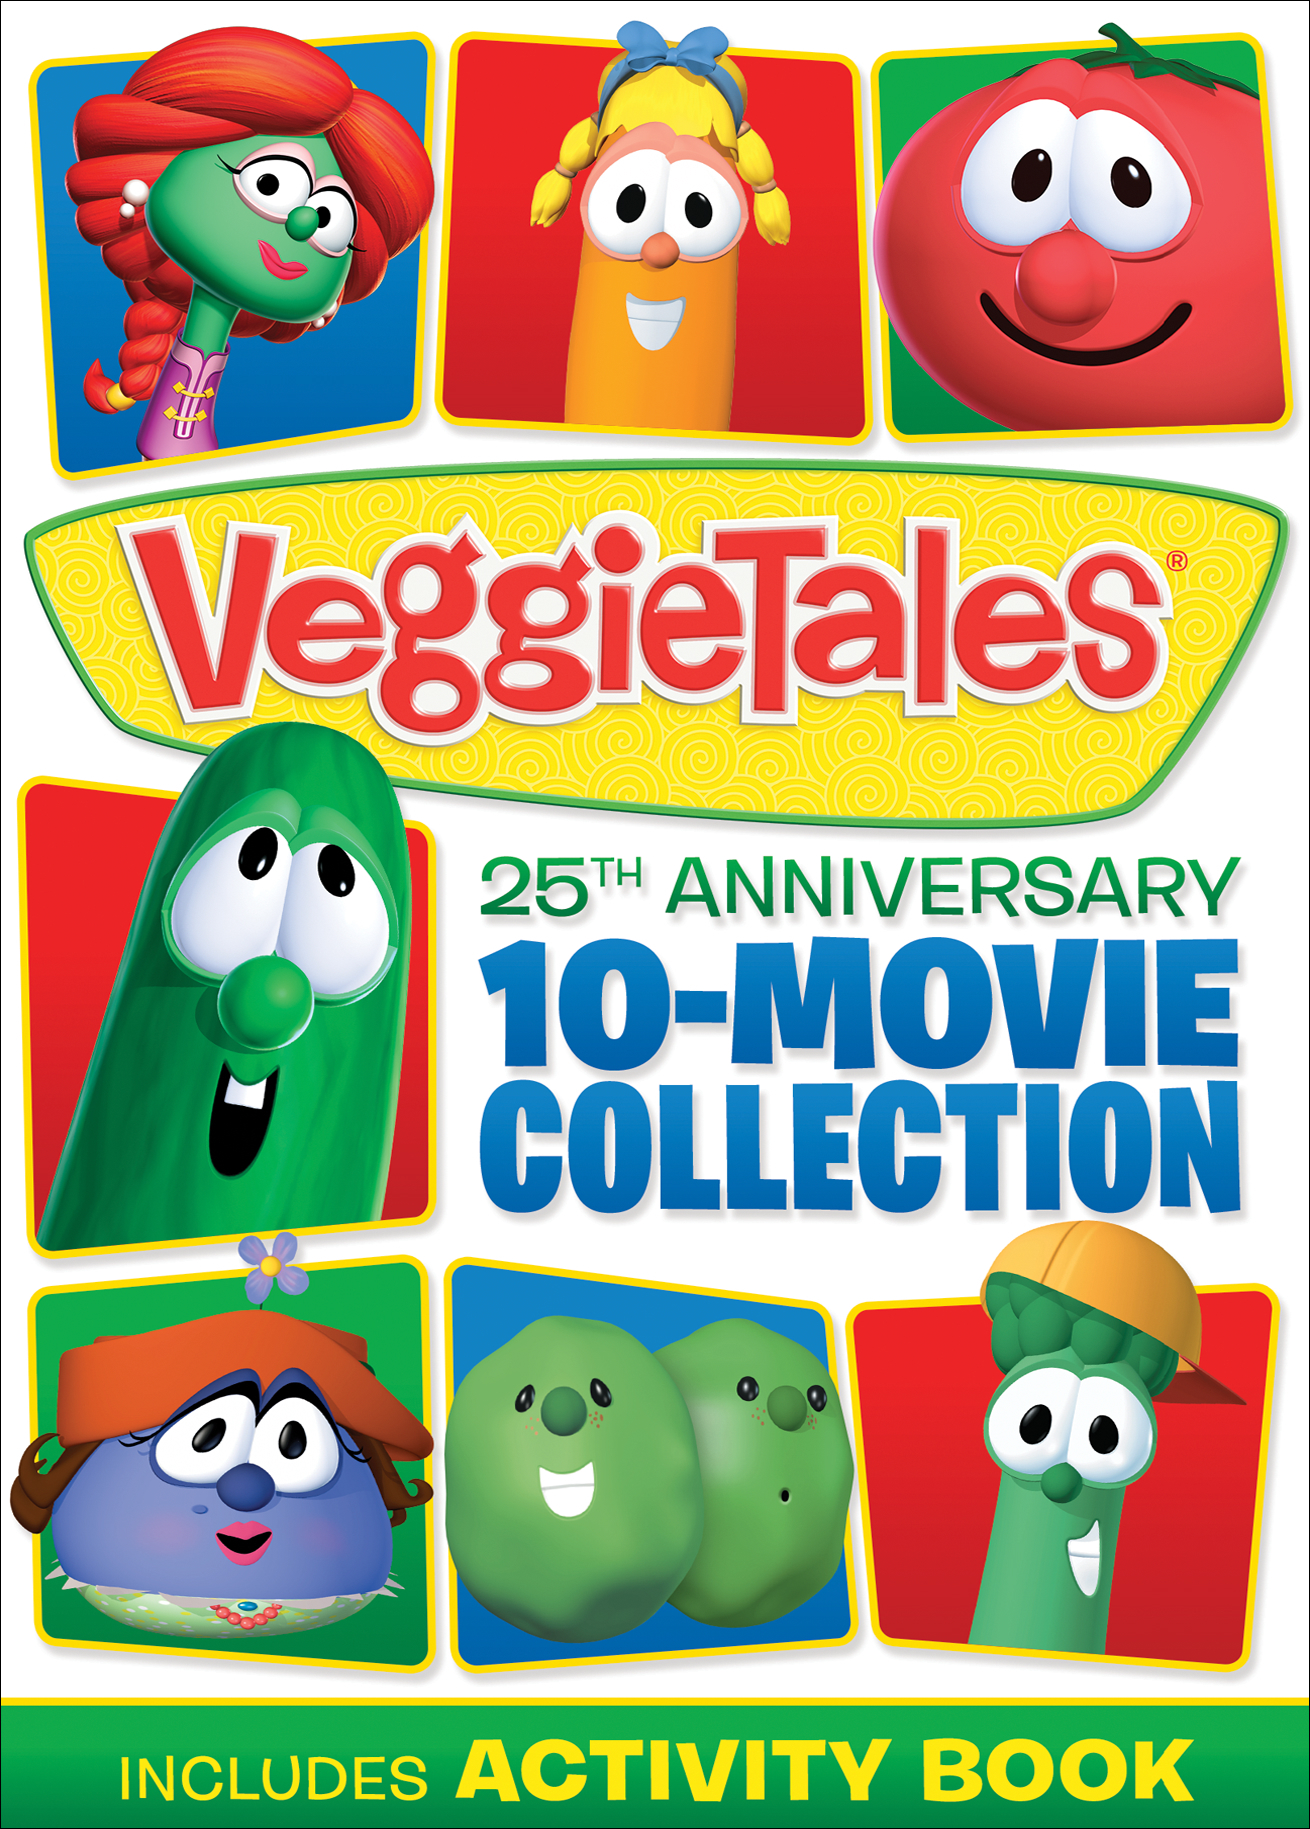 Buy VeggieTales: 10-movie Collection DVD Set DVD